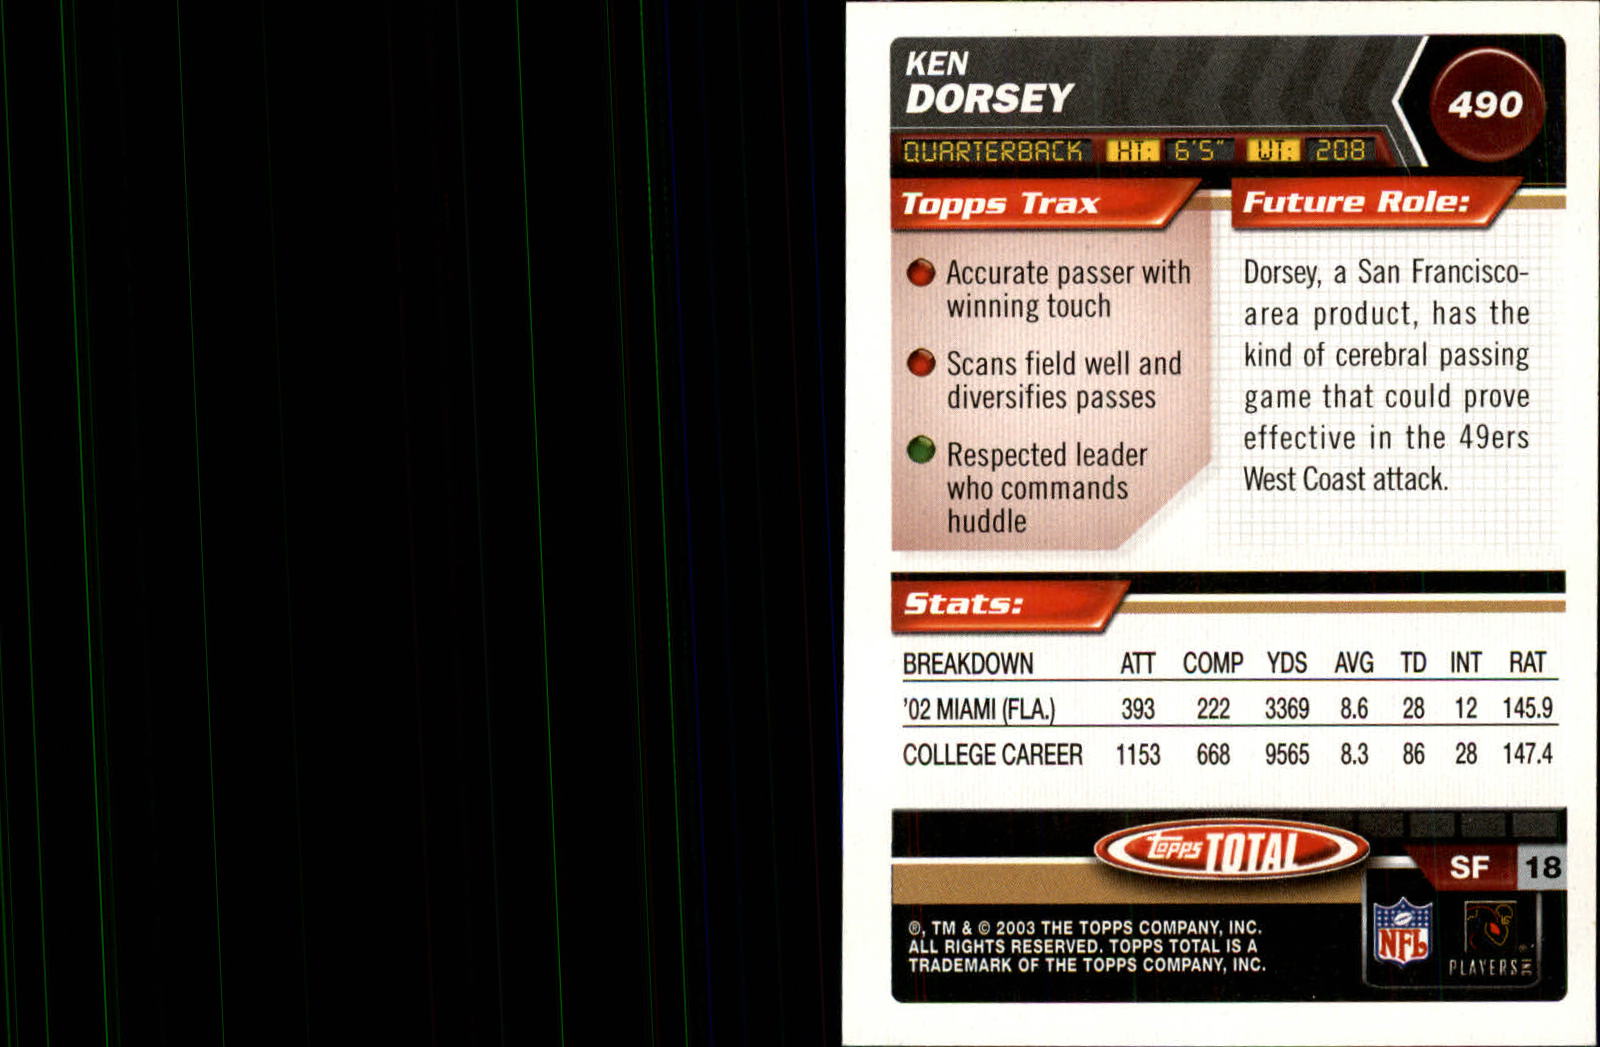 2003 Topps Total #490 Ken Dorsey RC back image